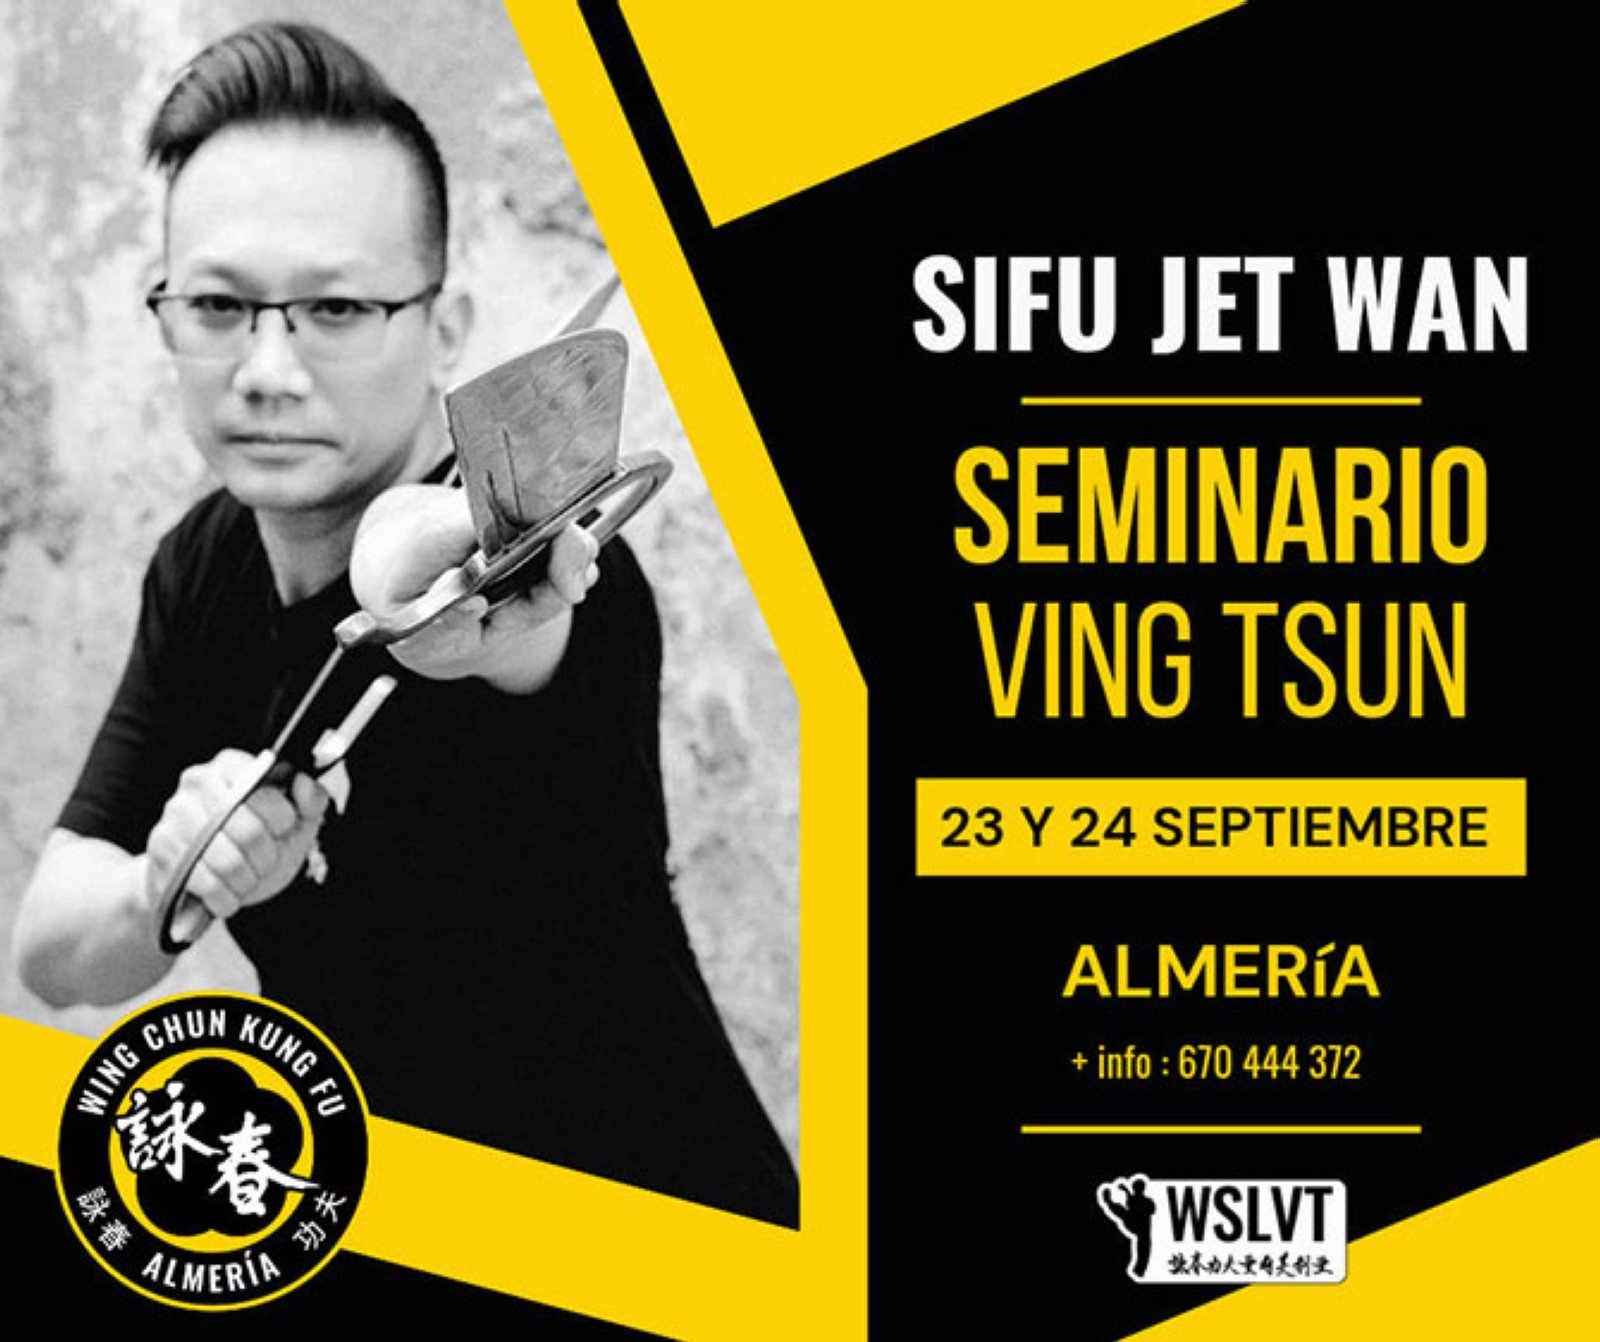 Seminario de Ving Tsun con Sifu Jet Wan en Almería